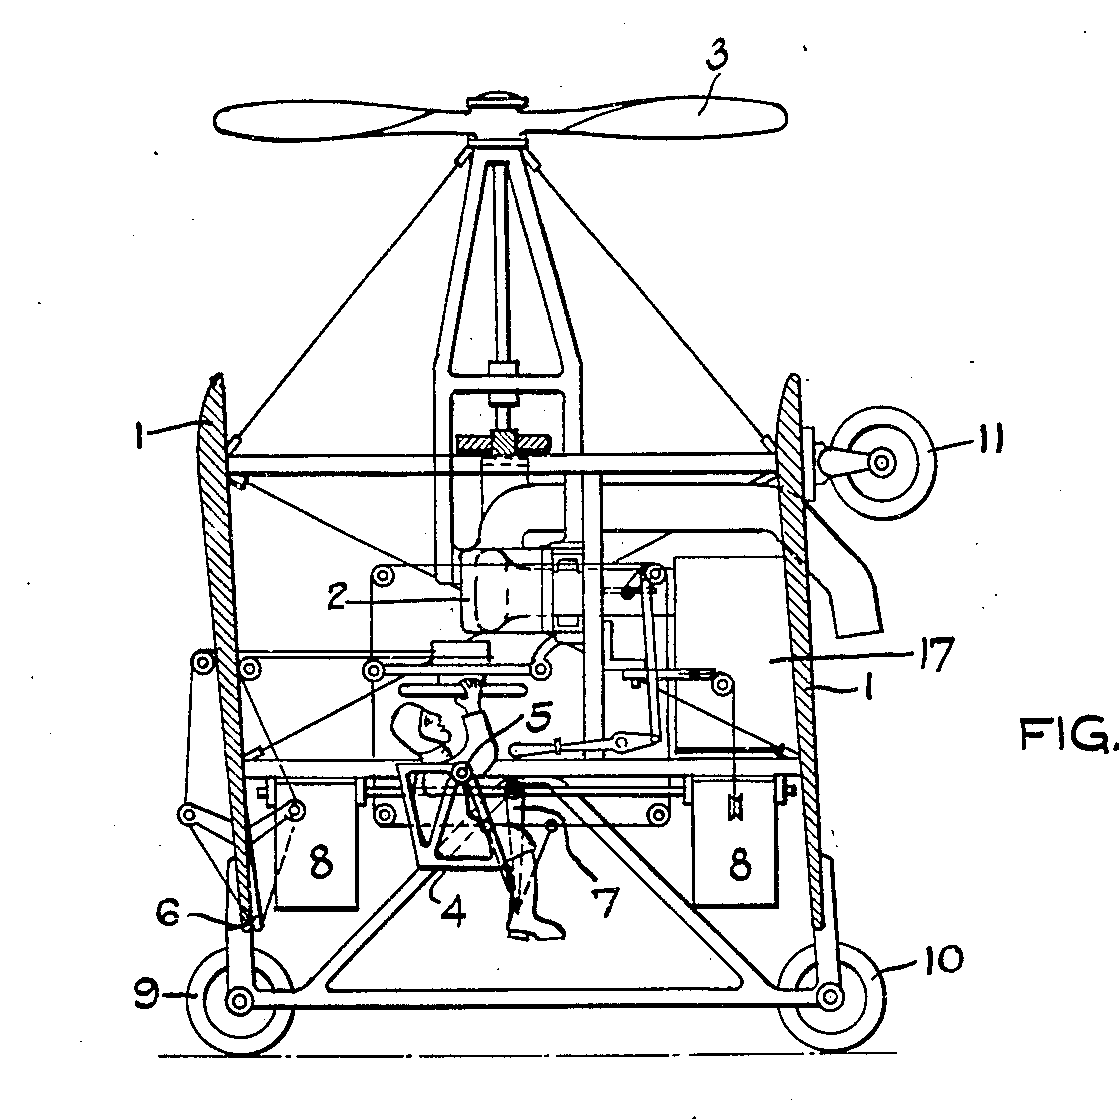 Nikola Tesla Patented a Vertical Takeoff Airplane Nearly 100 Years Ago